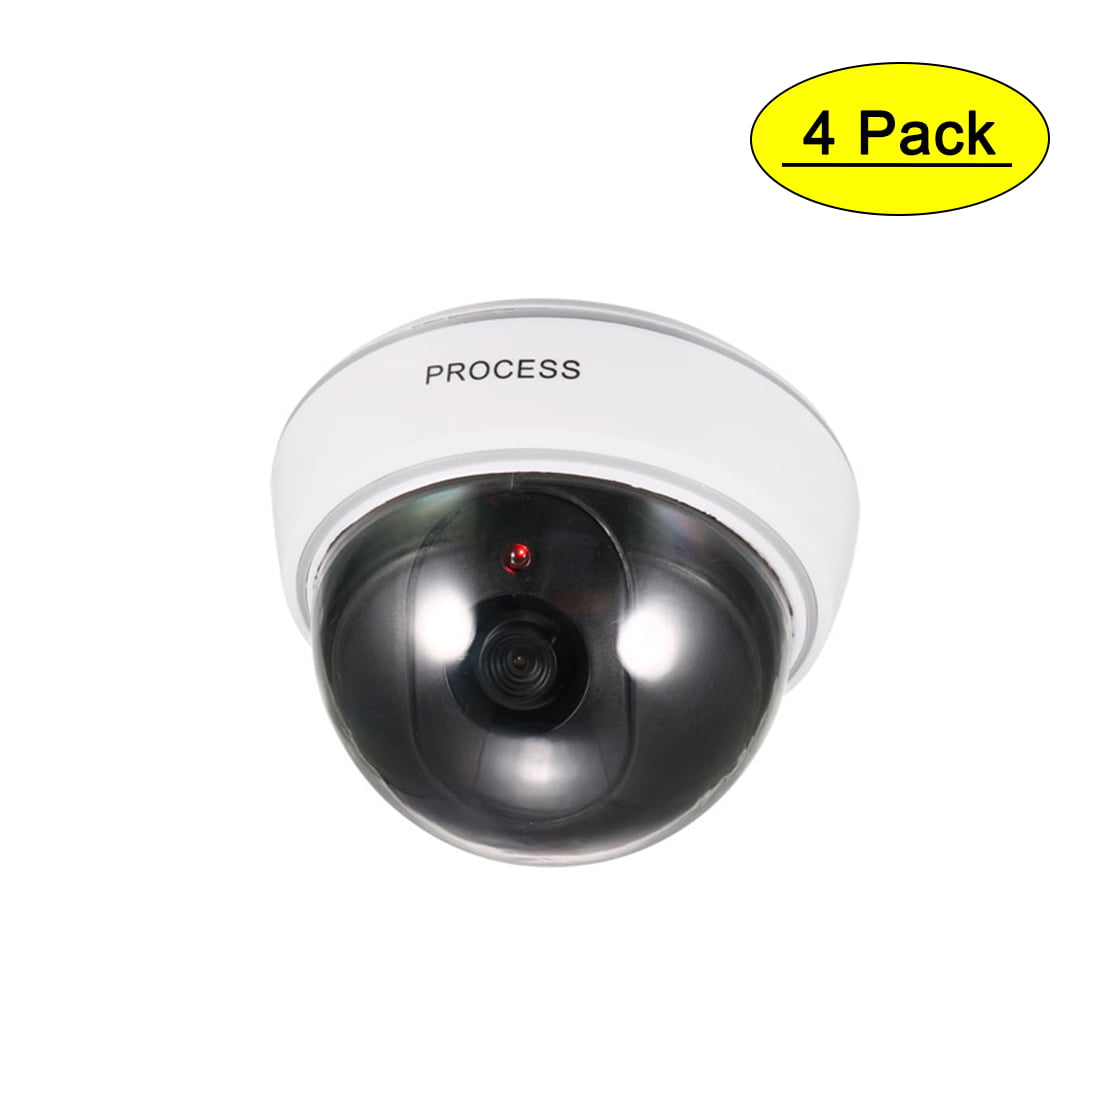 6 X Dummy Dome Security Camera CCTV False IR LED Flashing Red Light Outdoor XYZ